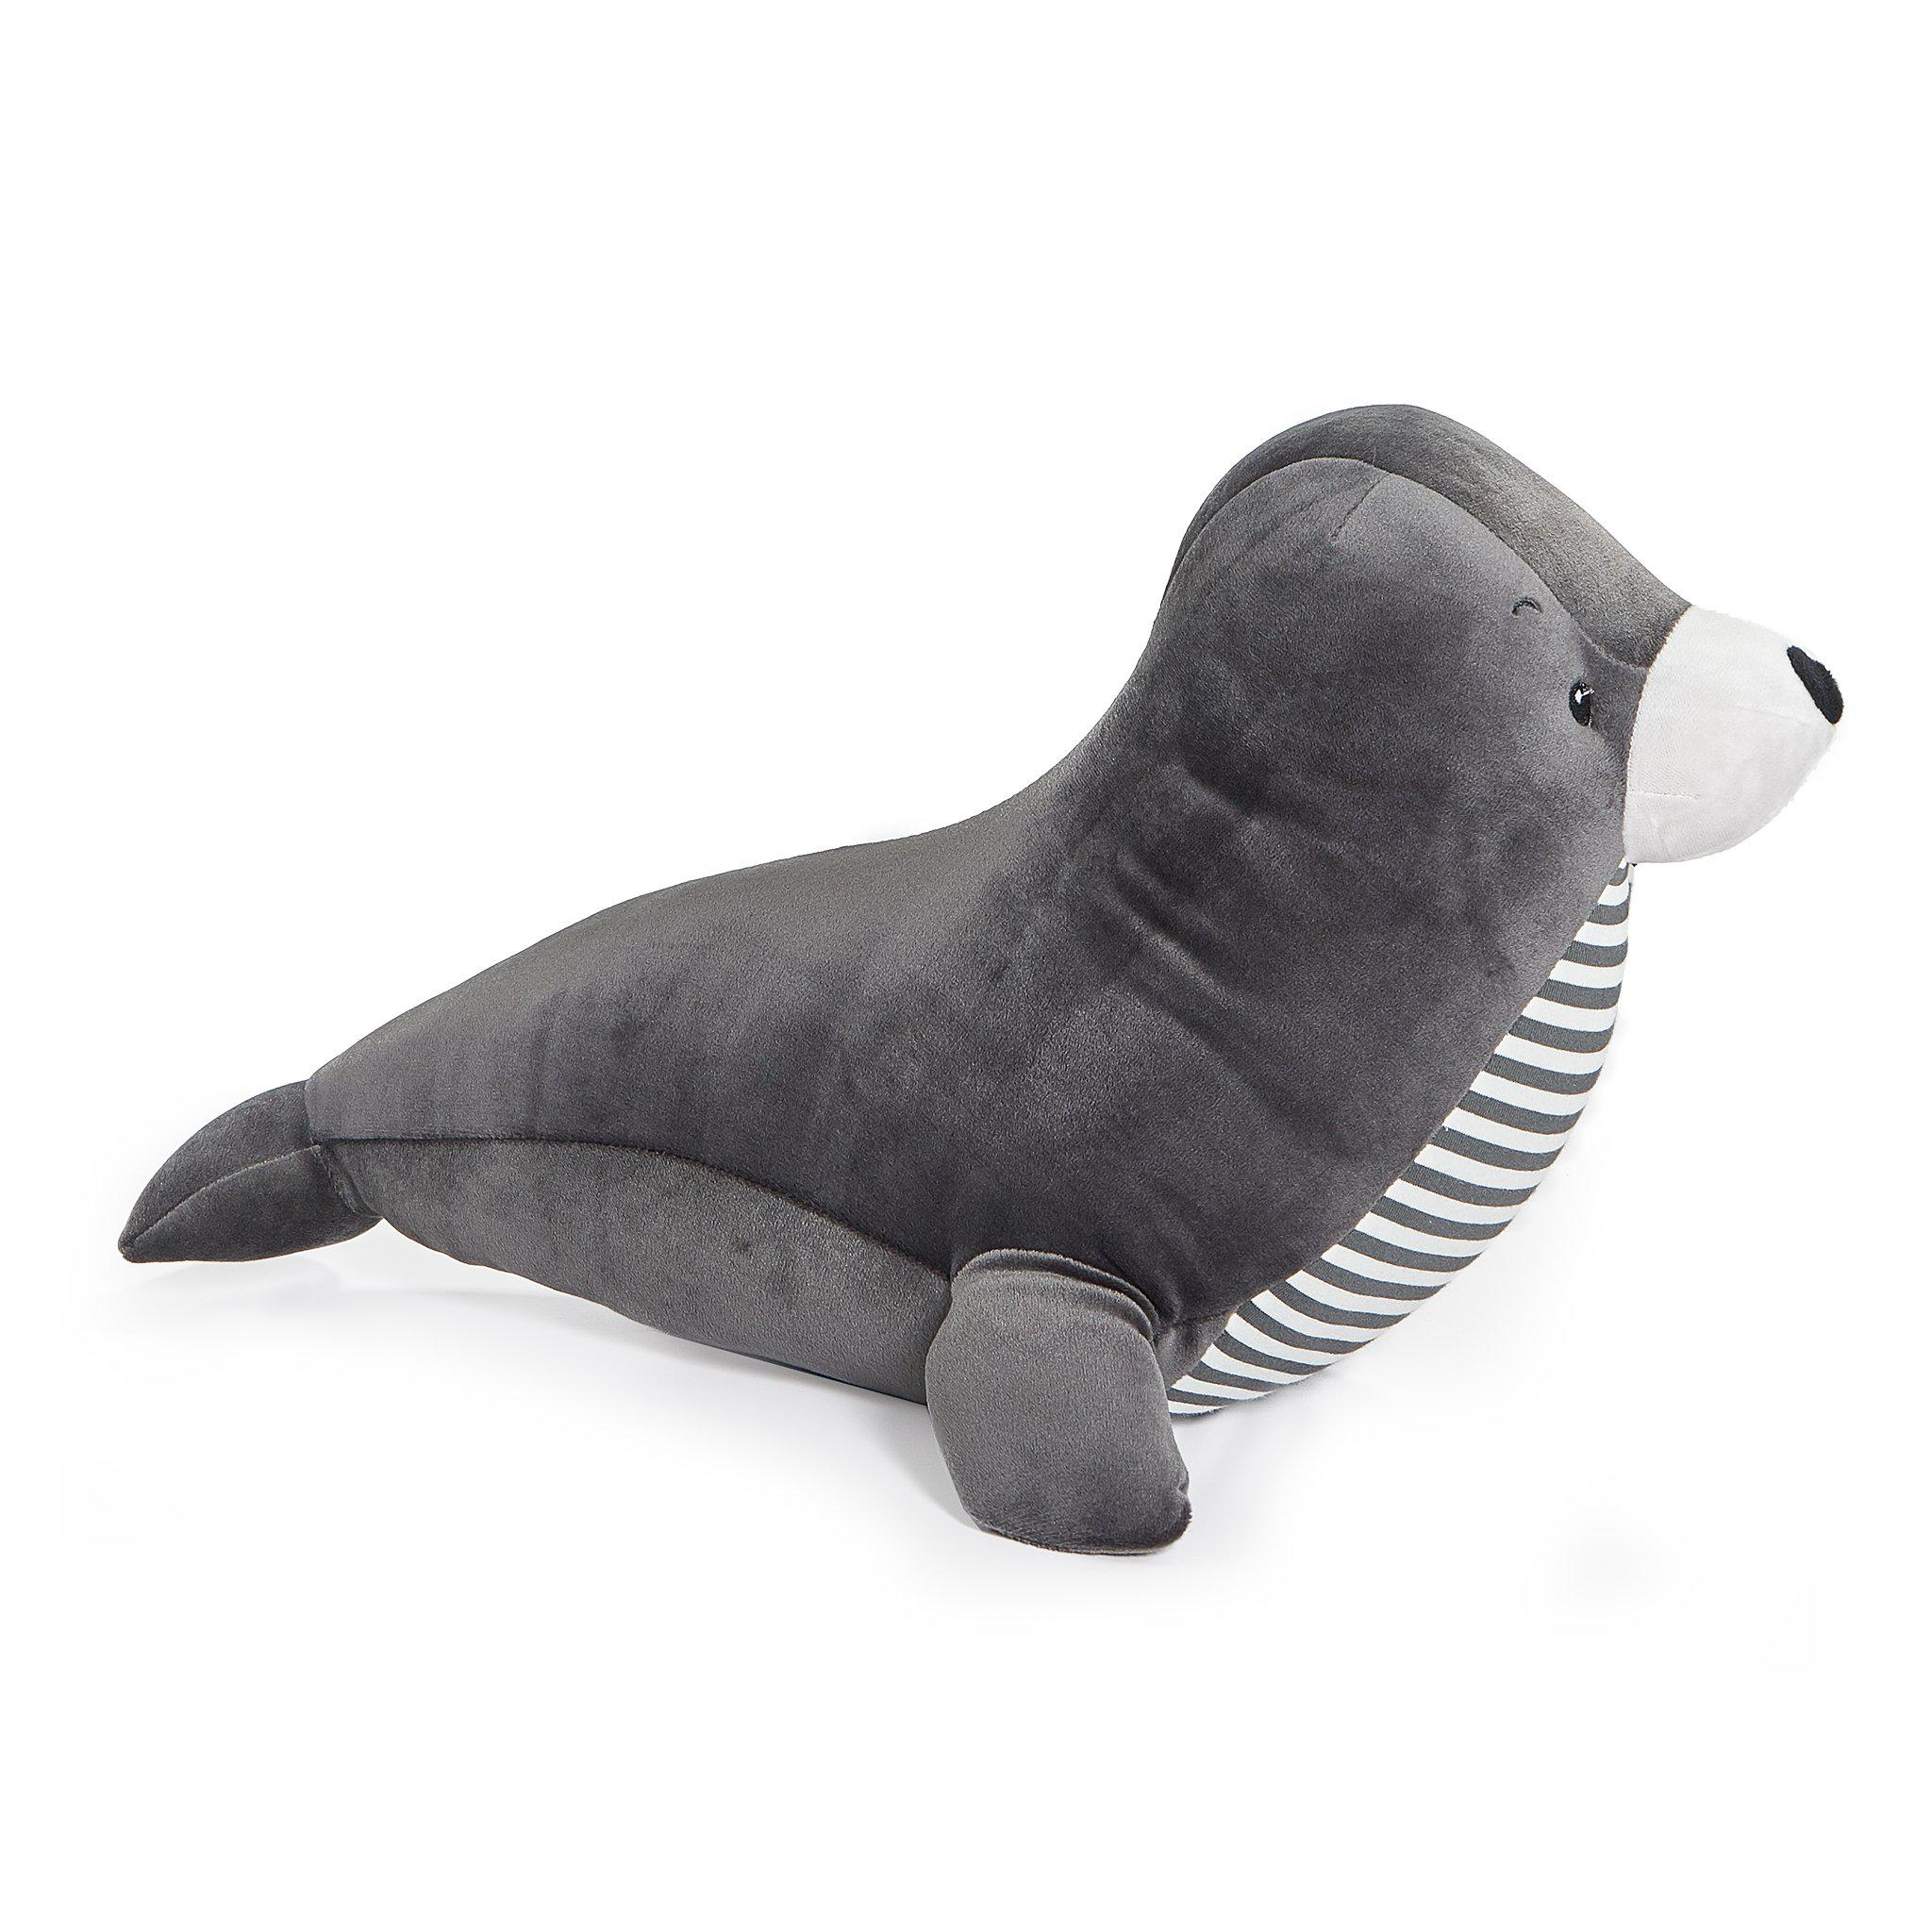 Seamore Seal-Stuffed Animal-SKU: 104329 - Bunnies By The Bay